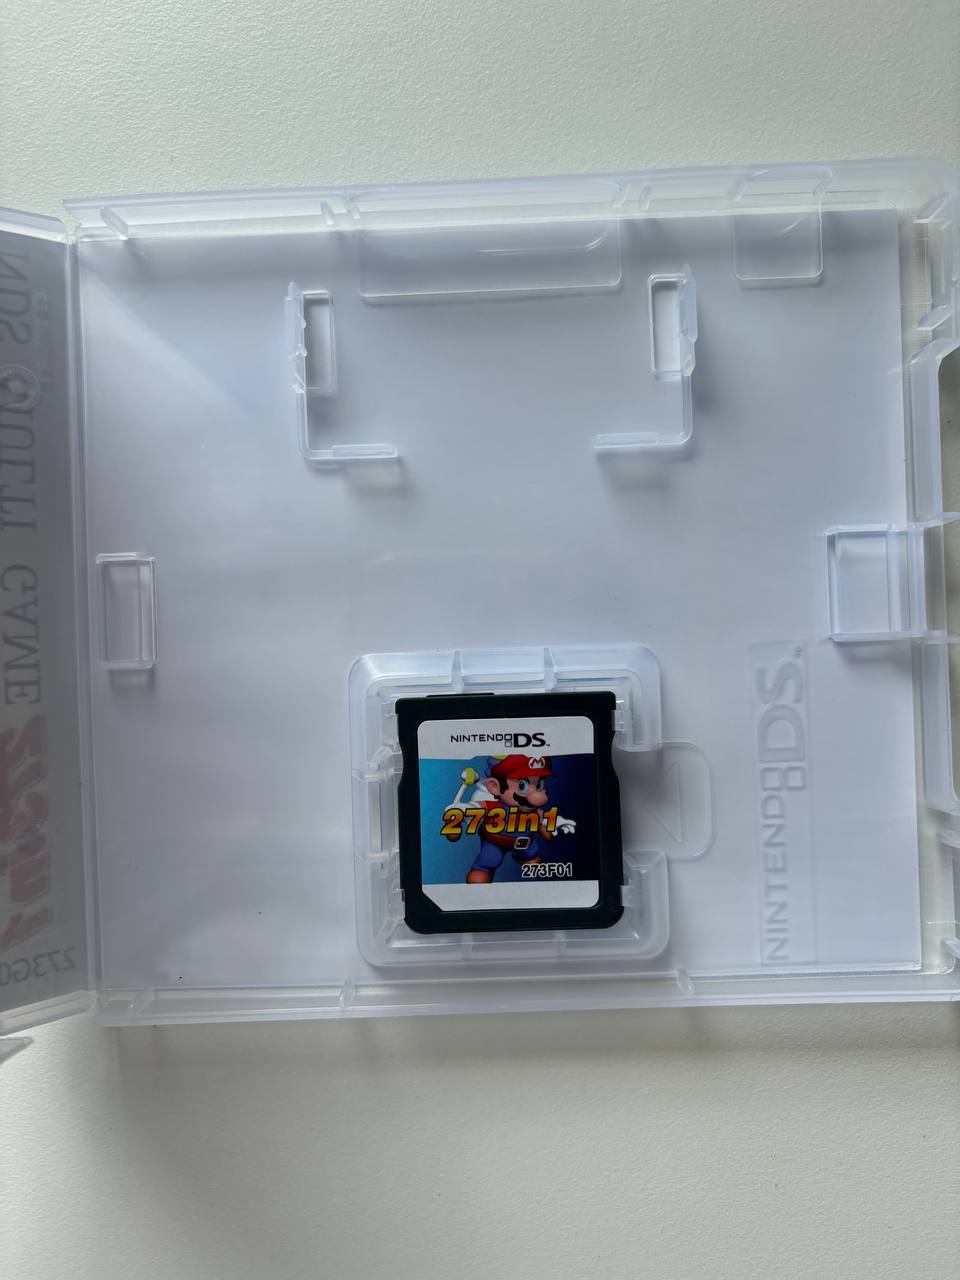 Multi Game 273 in 1 Nintendo DS 3DS